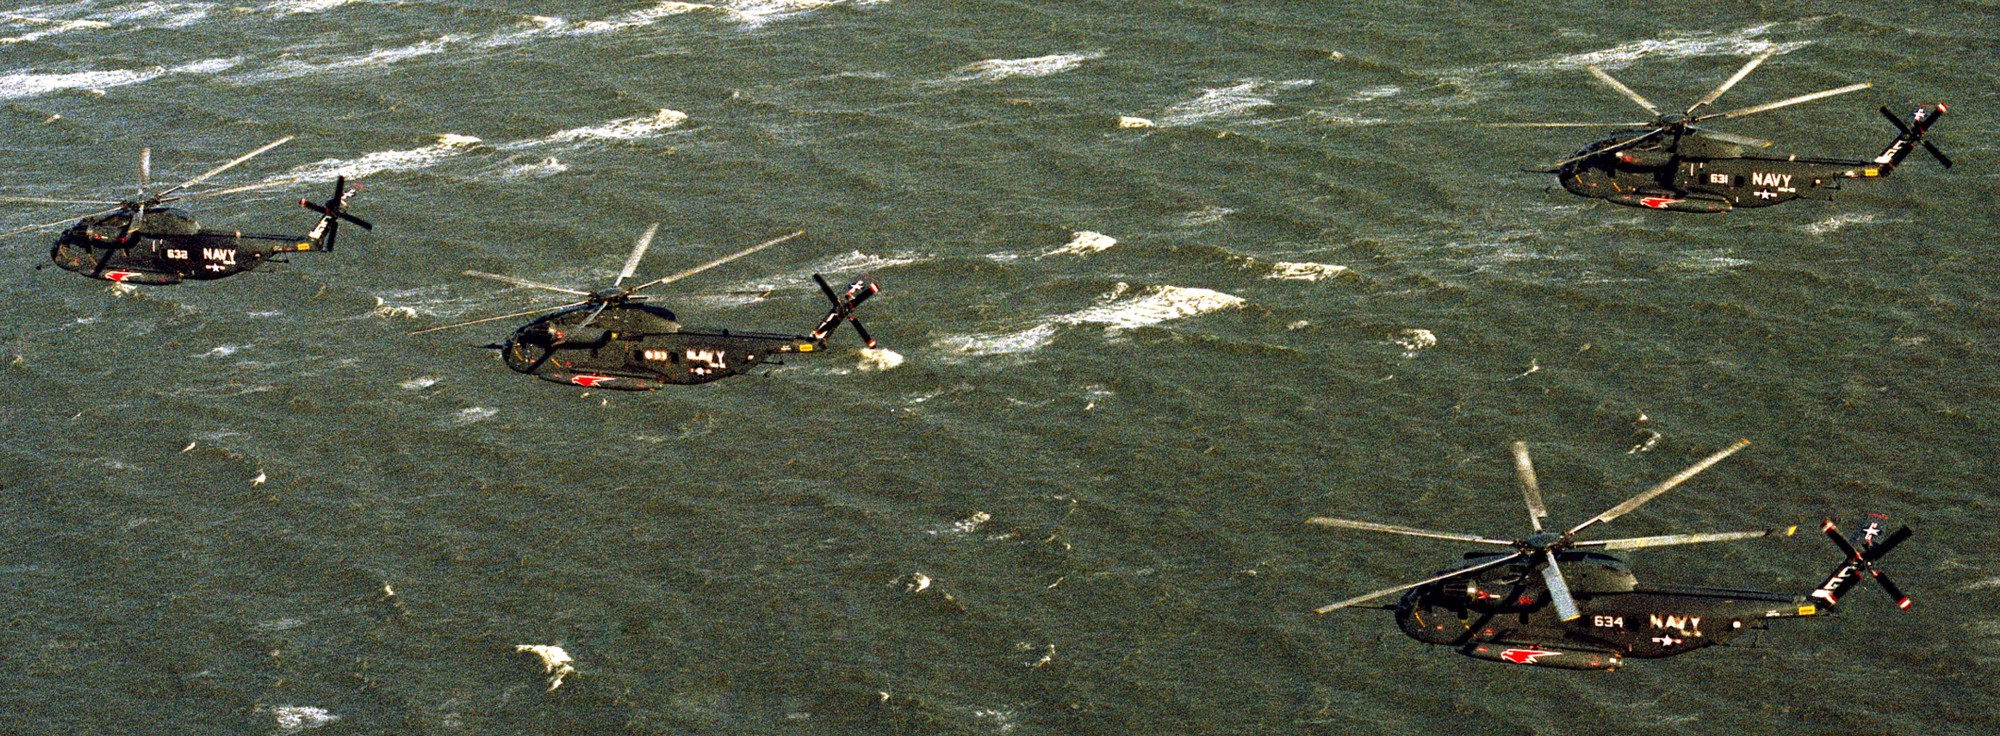 hm-16 seahawks helicopter mine countermeasures squadron navy rh-53d sea stallion 04